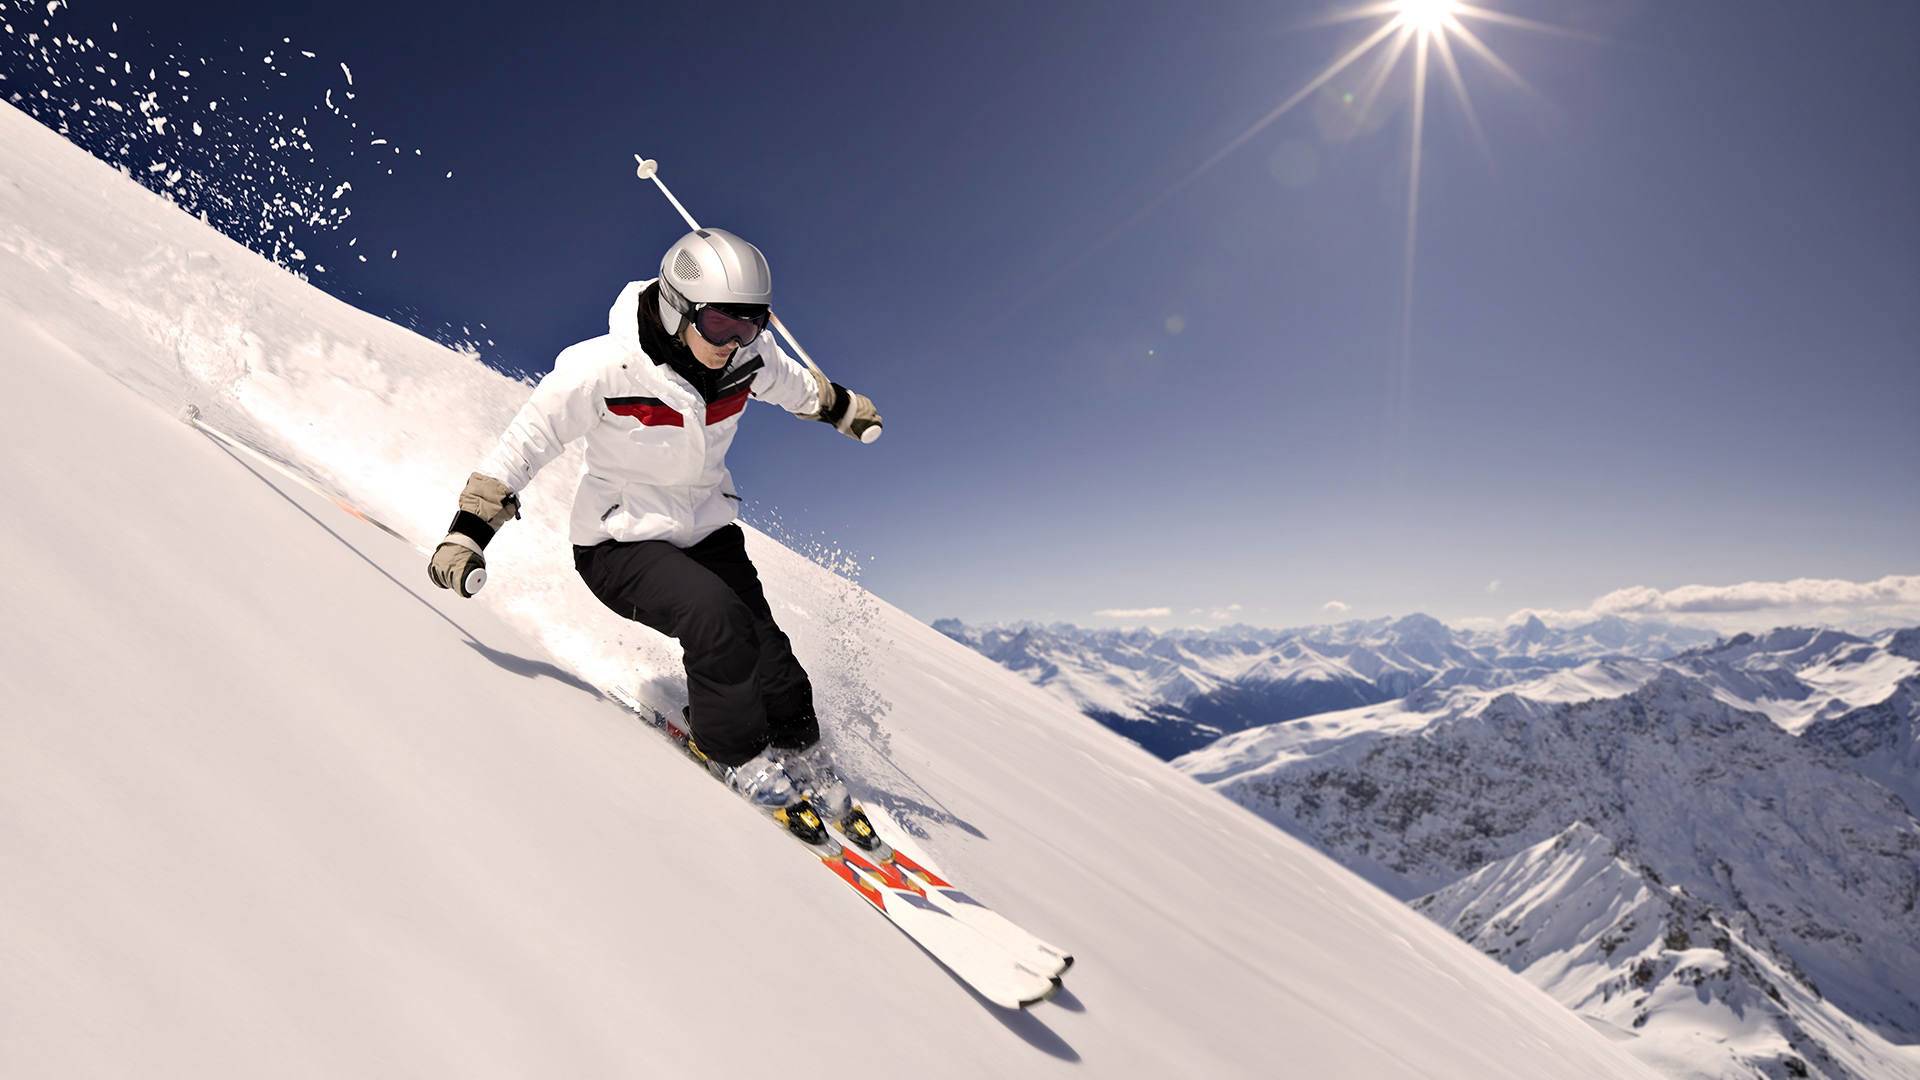 Wallpaper For > HD Snowboarding Wallpaper